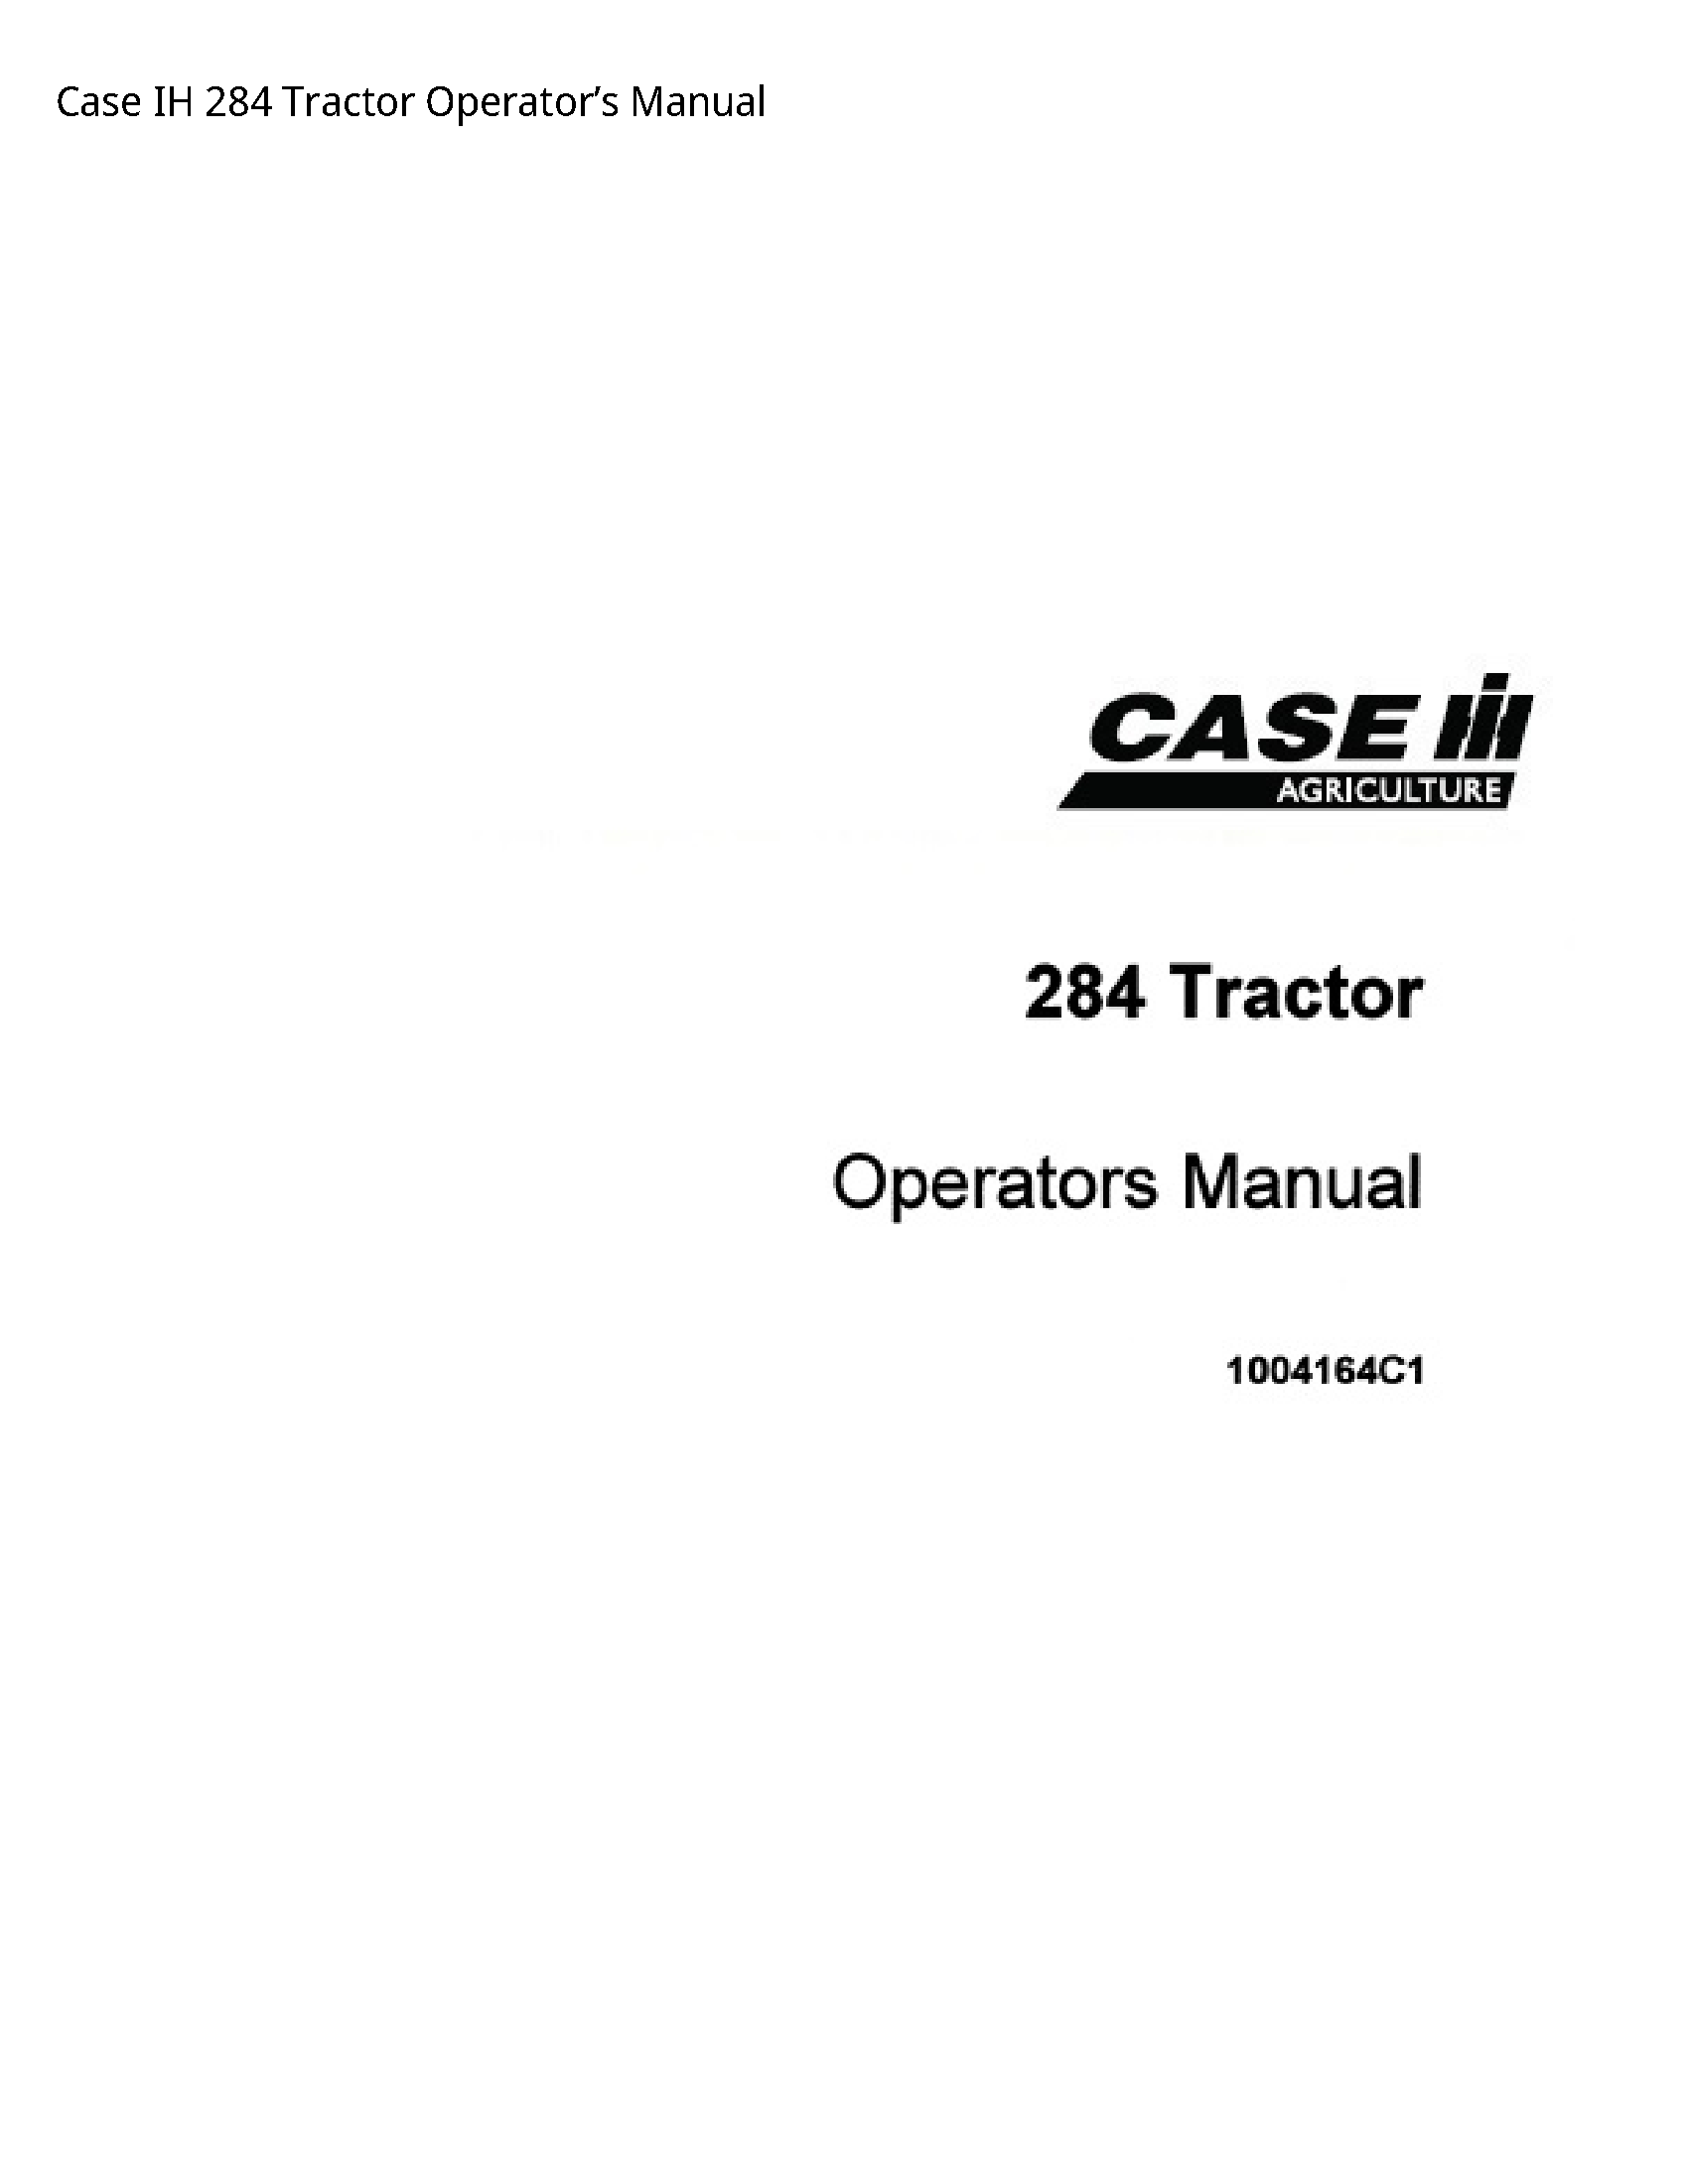 Case/Case IH 284 IH Tractor Operator’s manual